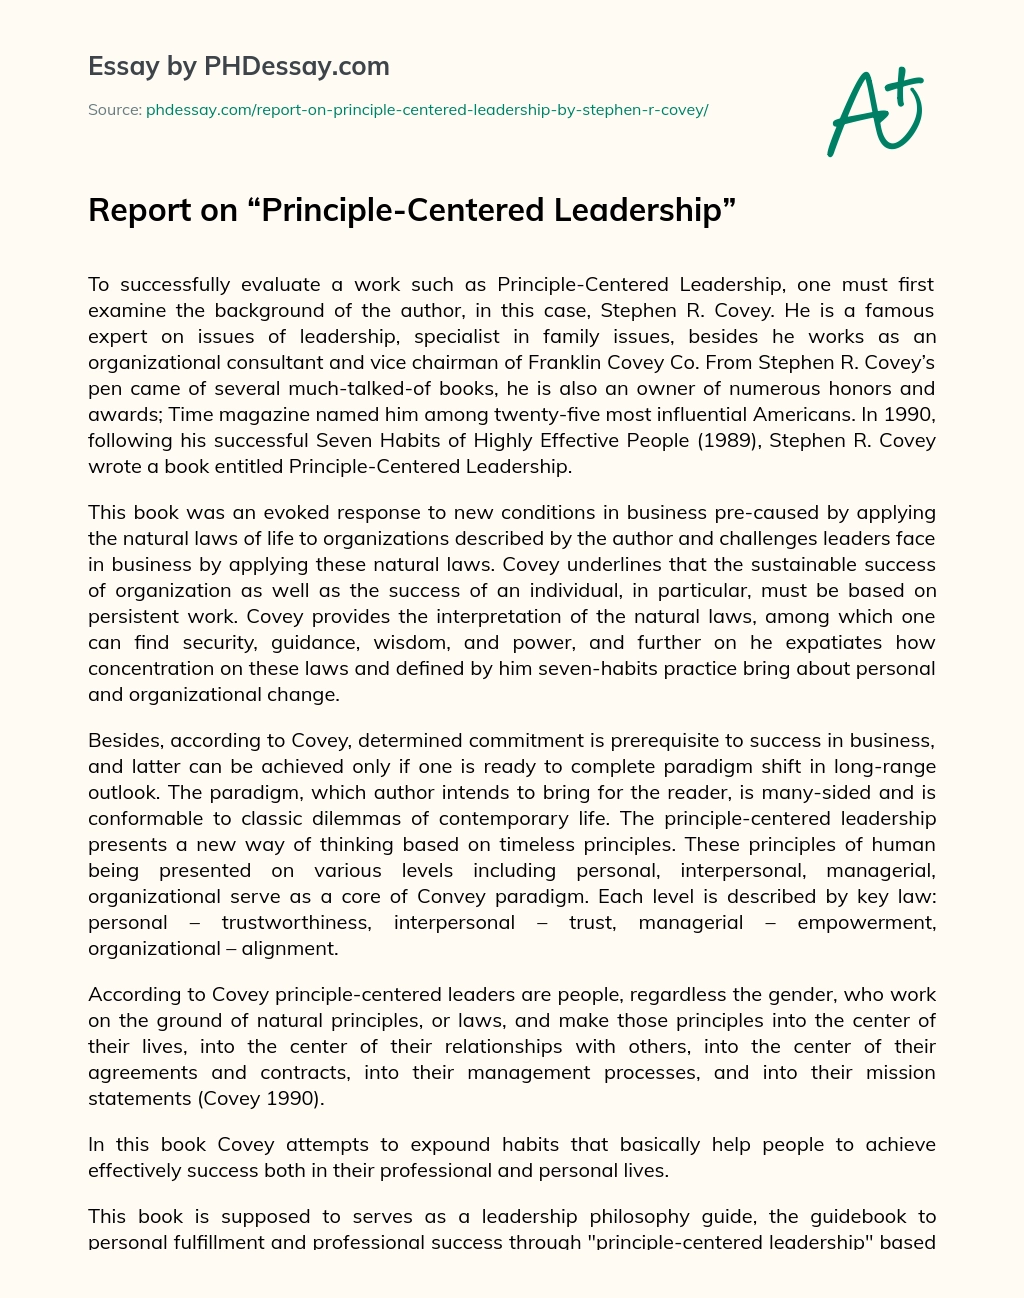 Report on “Principle-Centered Leadership” essay